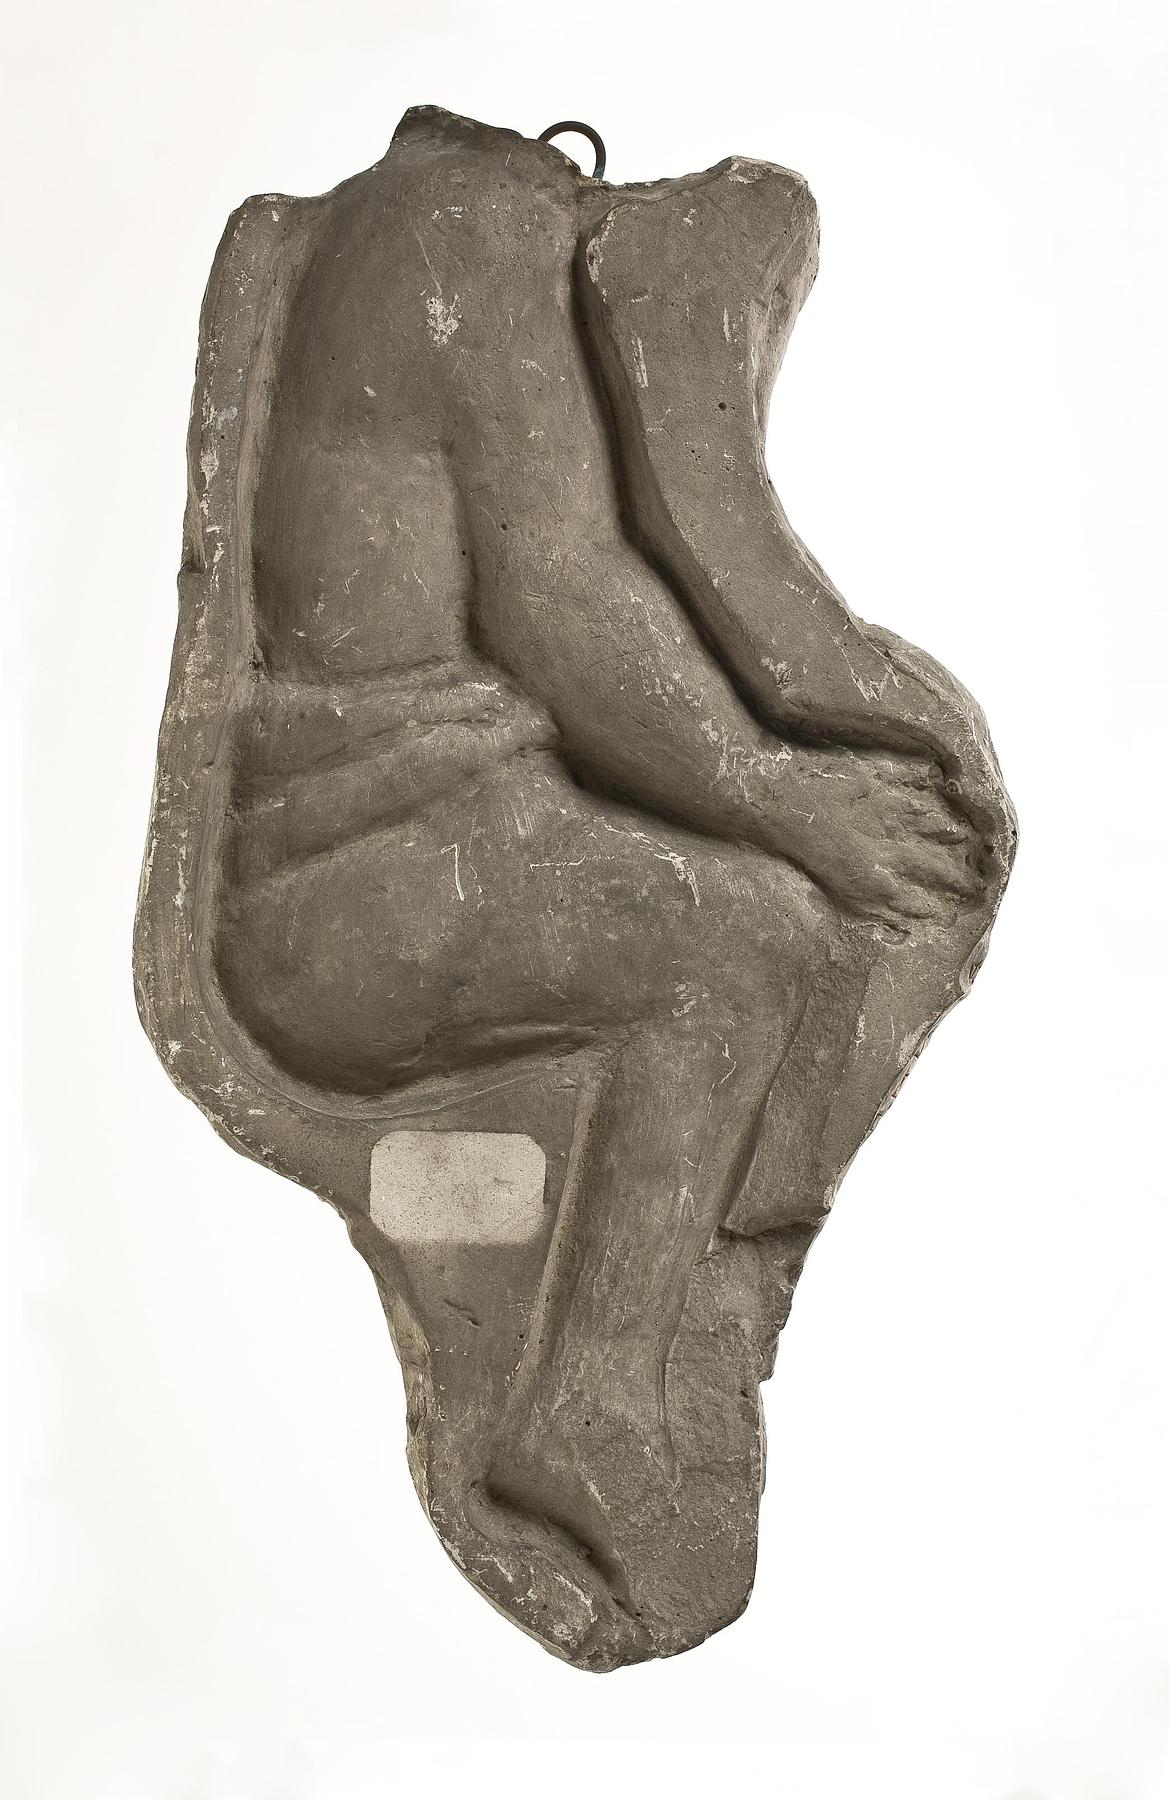 Seated figure, L244